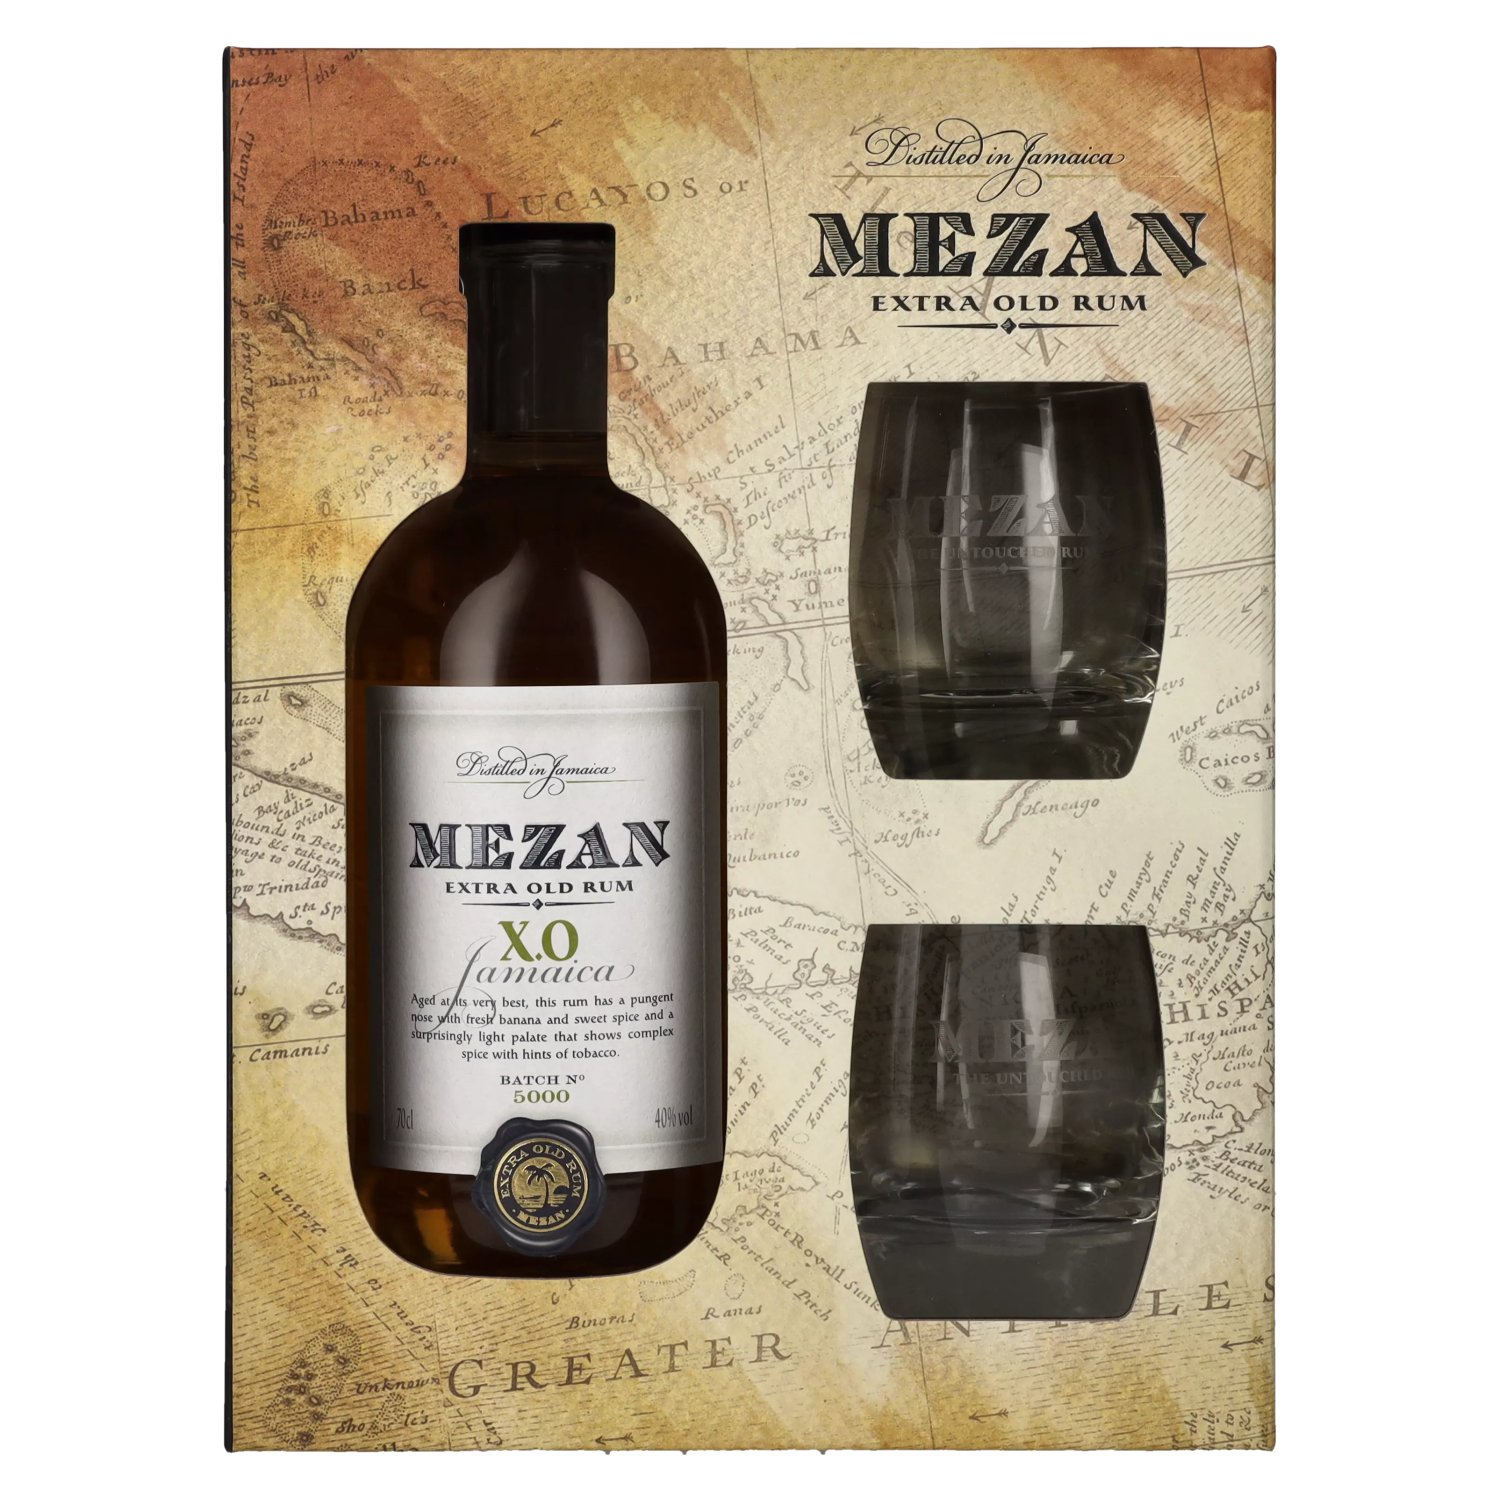 Mezan XO Jamaican Rum 40% Vol. 0,7l in Giftbox with 2 glasses